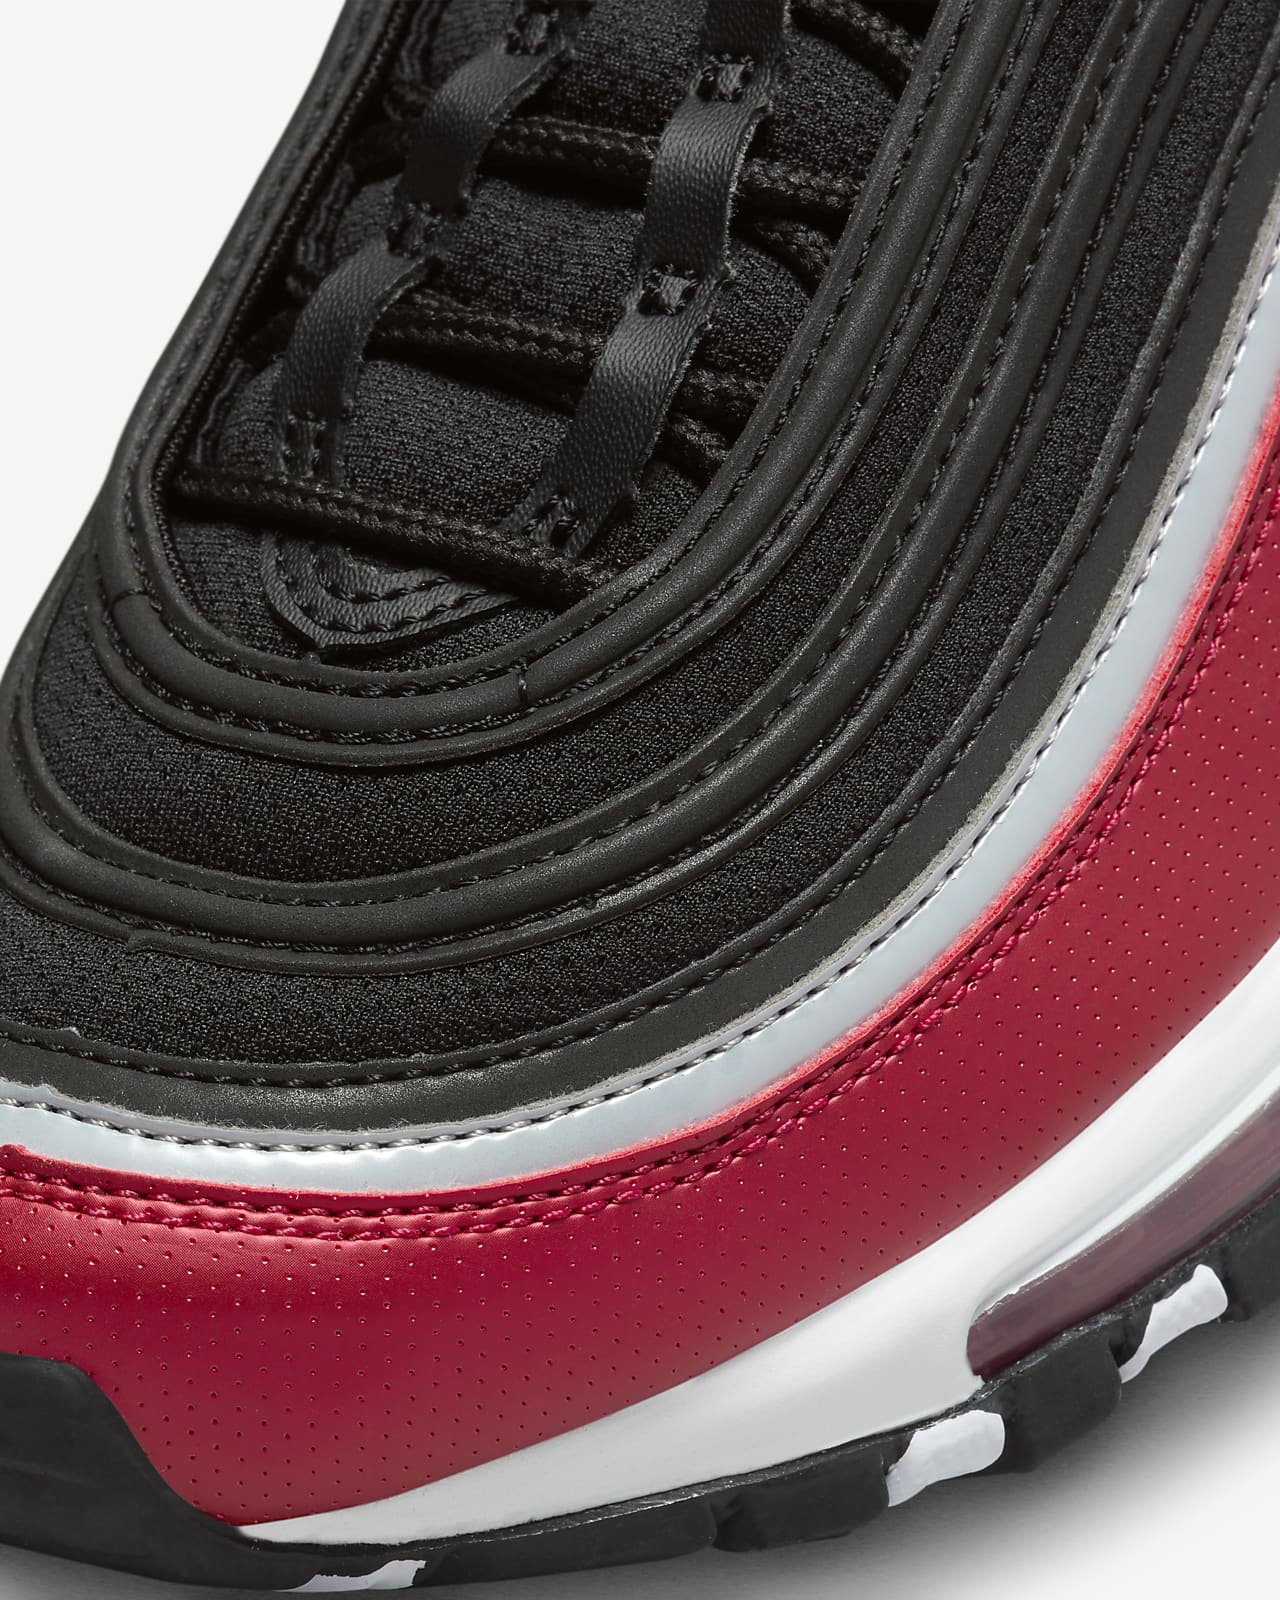 Nike Air Max 97 Metallic Silver/Varsity Red/White/Black Women's Shoe